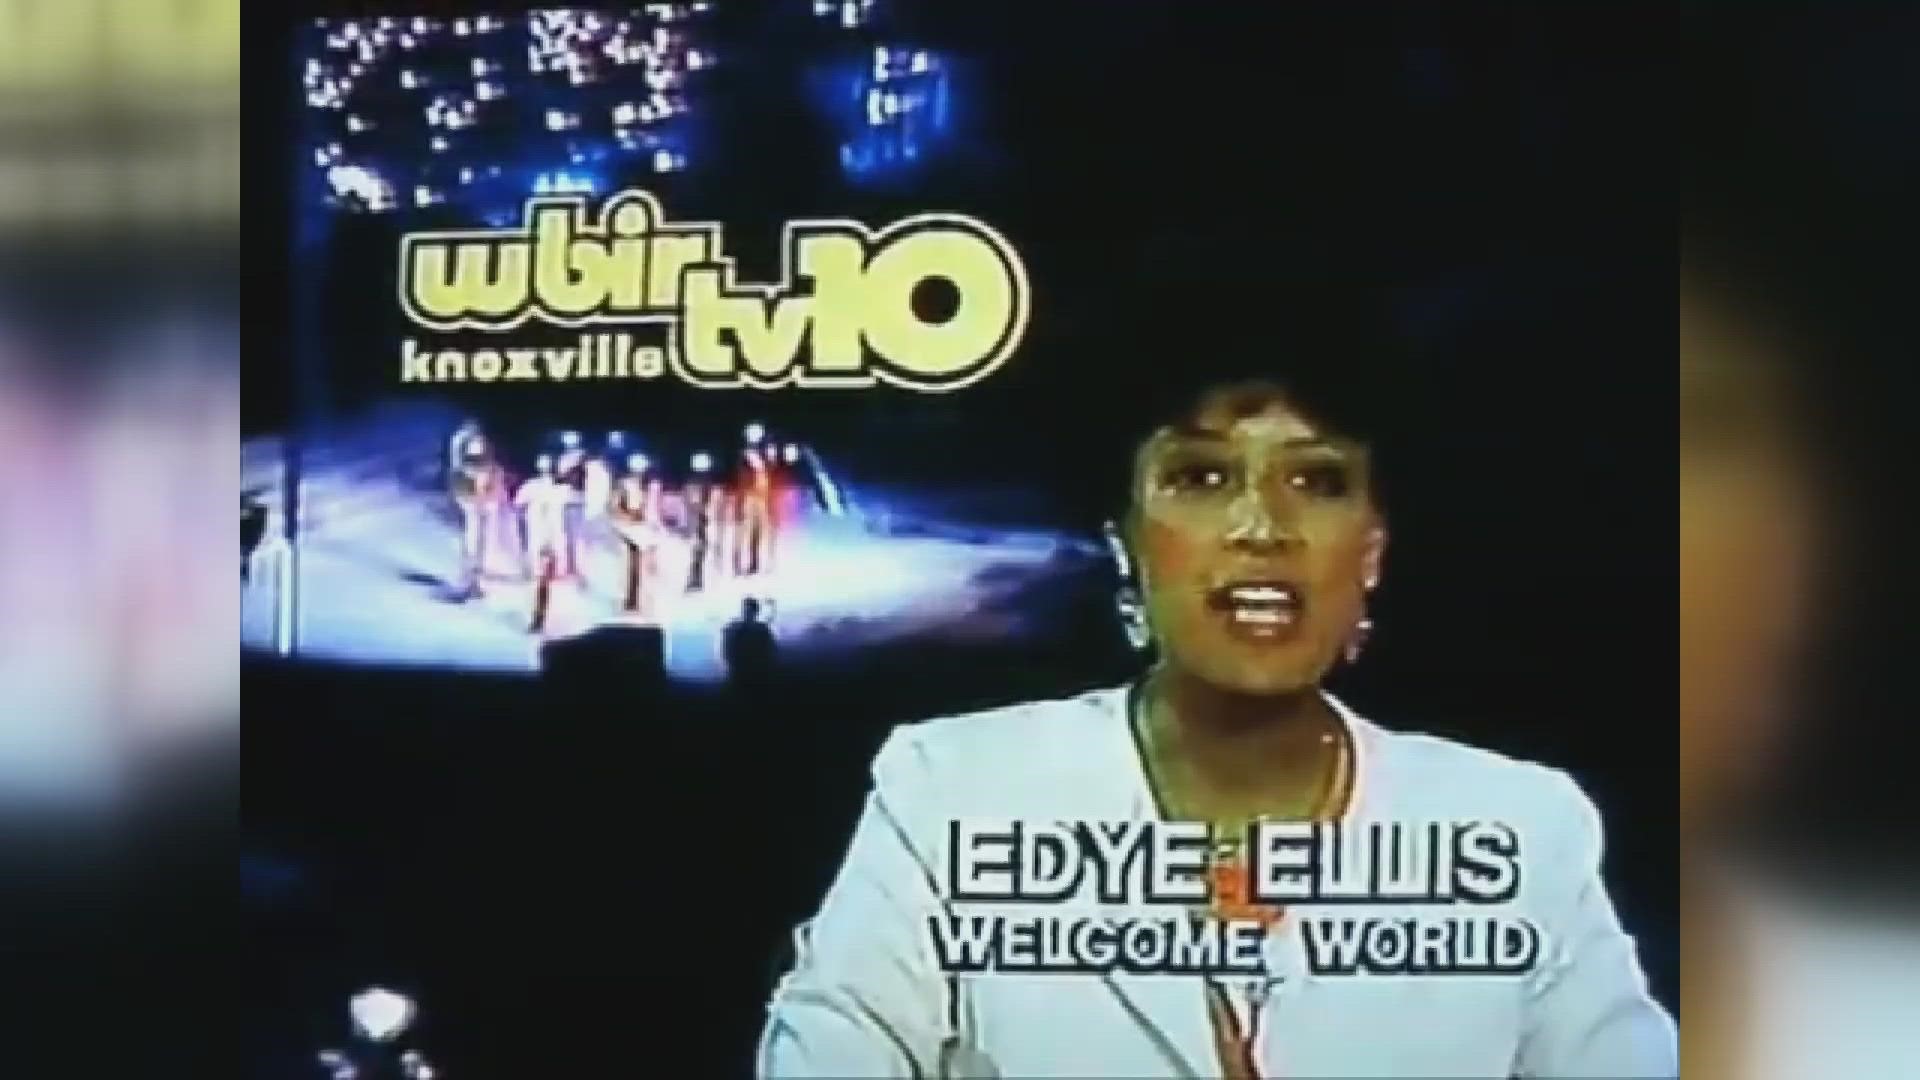 Former WBIR anchor Edye Ellis began her career at WBIR in 1982.